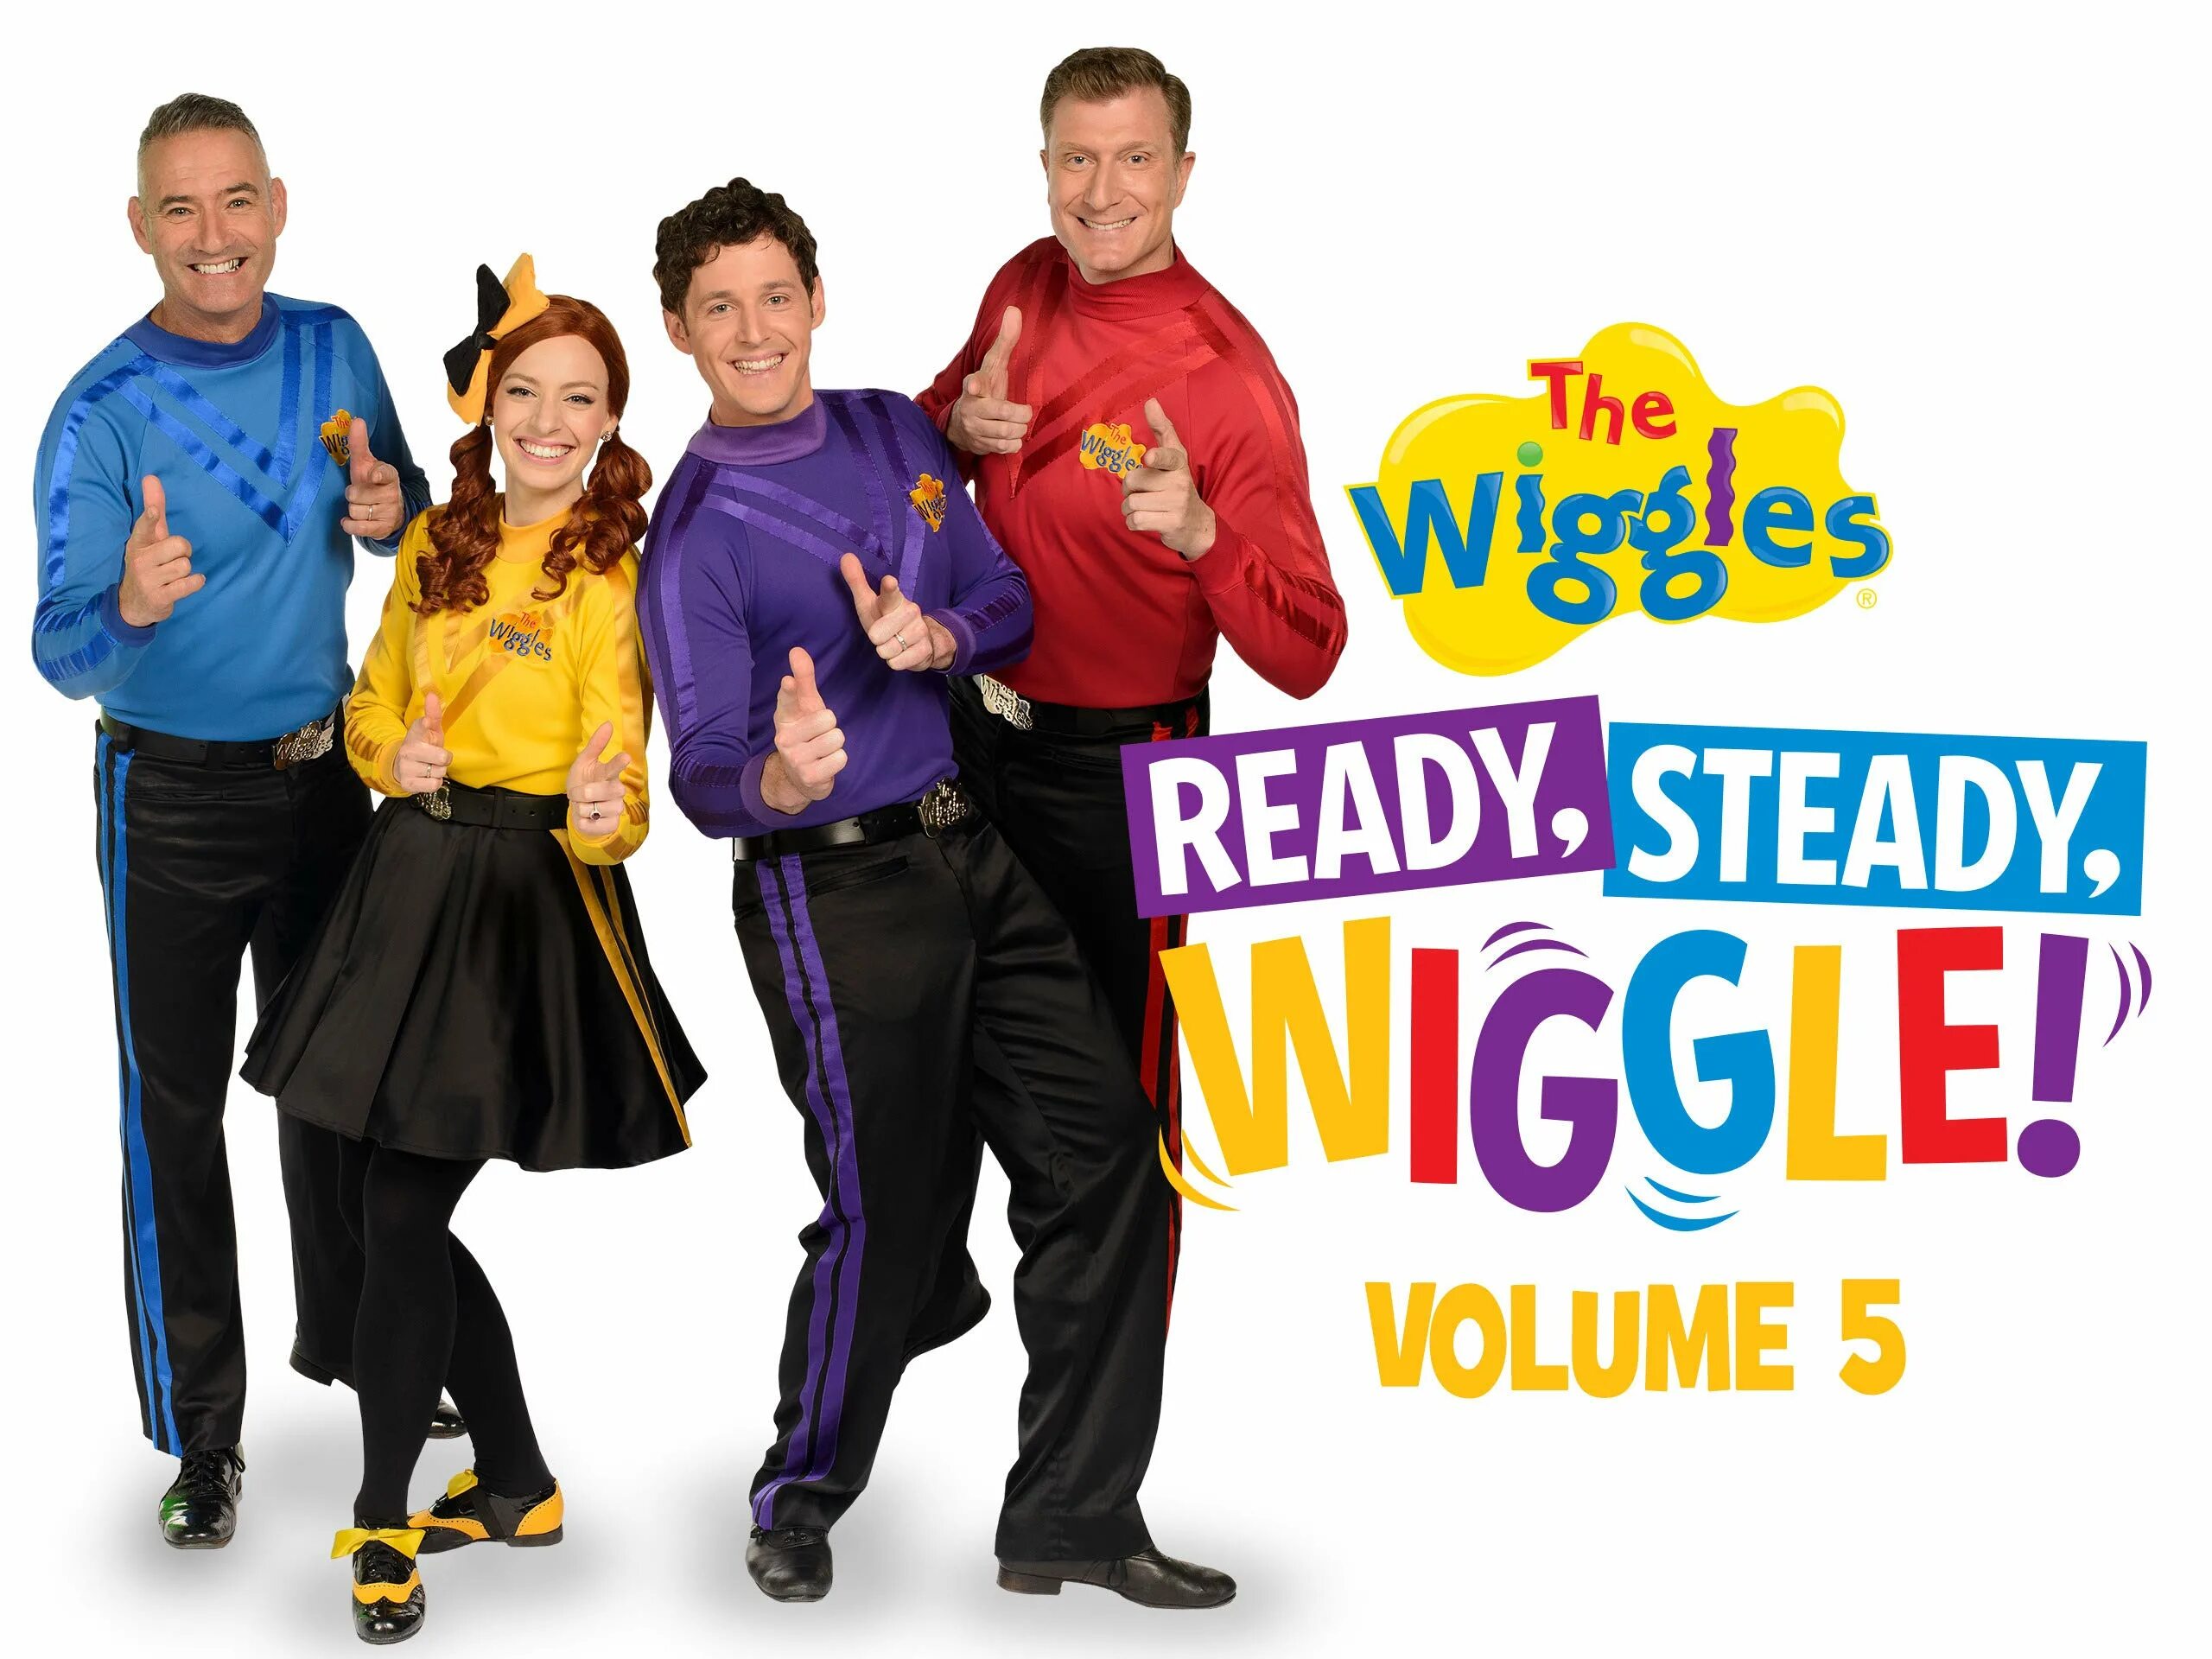 Ready steady перевод. Wiggle. The Wiggles: ready, steady, Wiggle!. Wiggle Мем. Wiggle перевод.